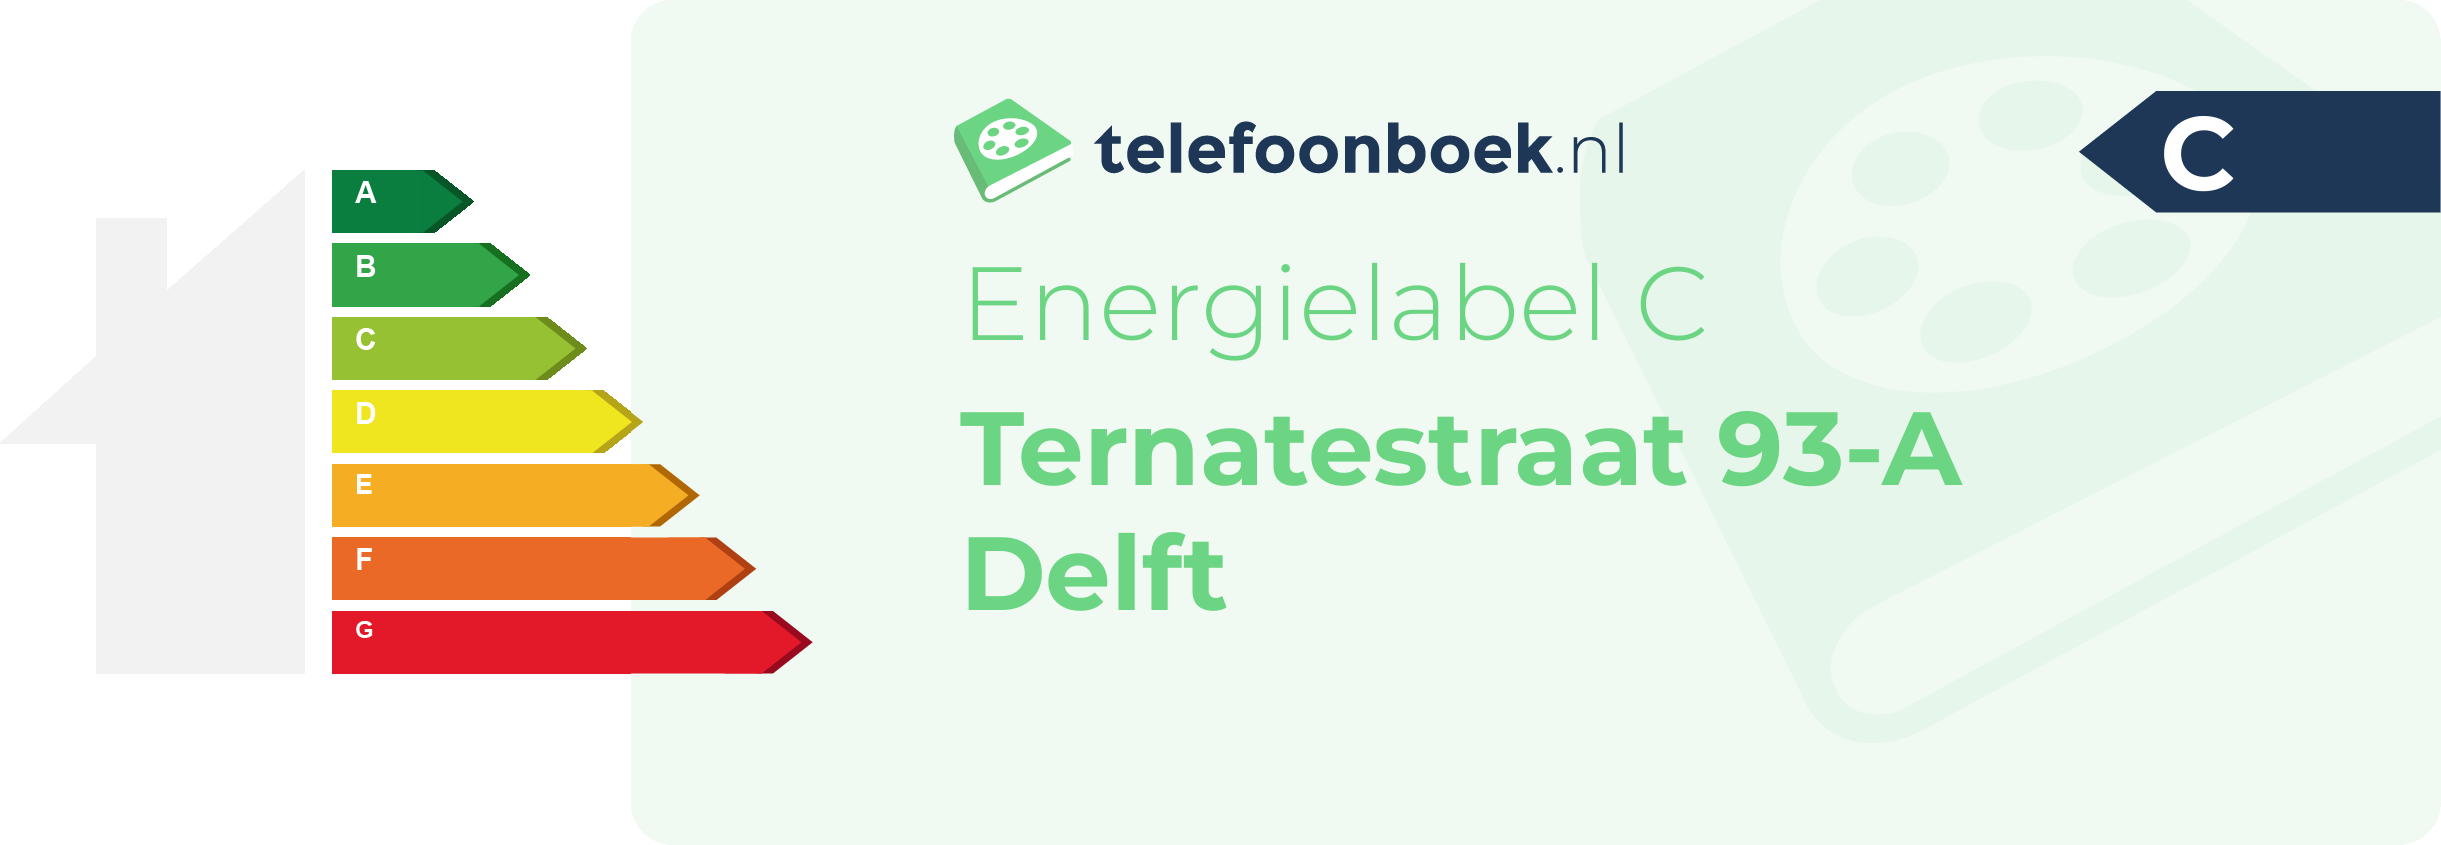 Energielabel Ternatestraat 93-A Delft